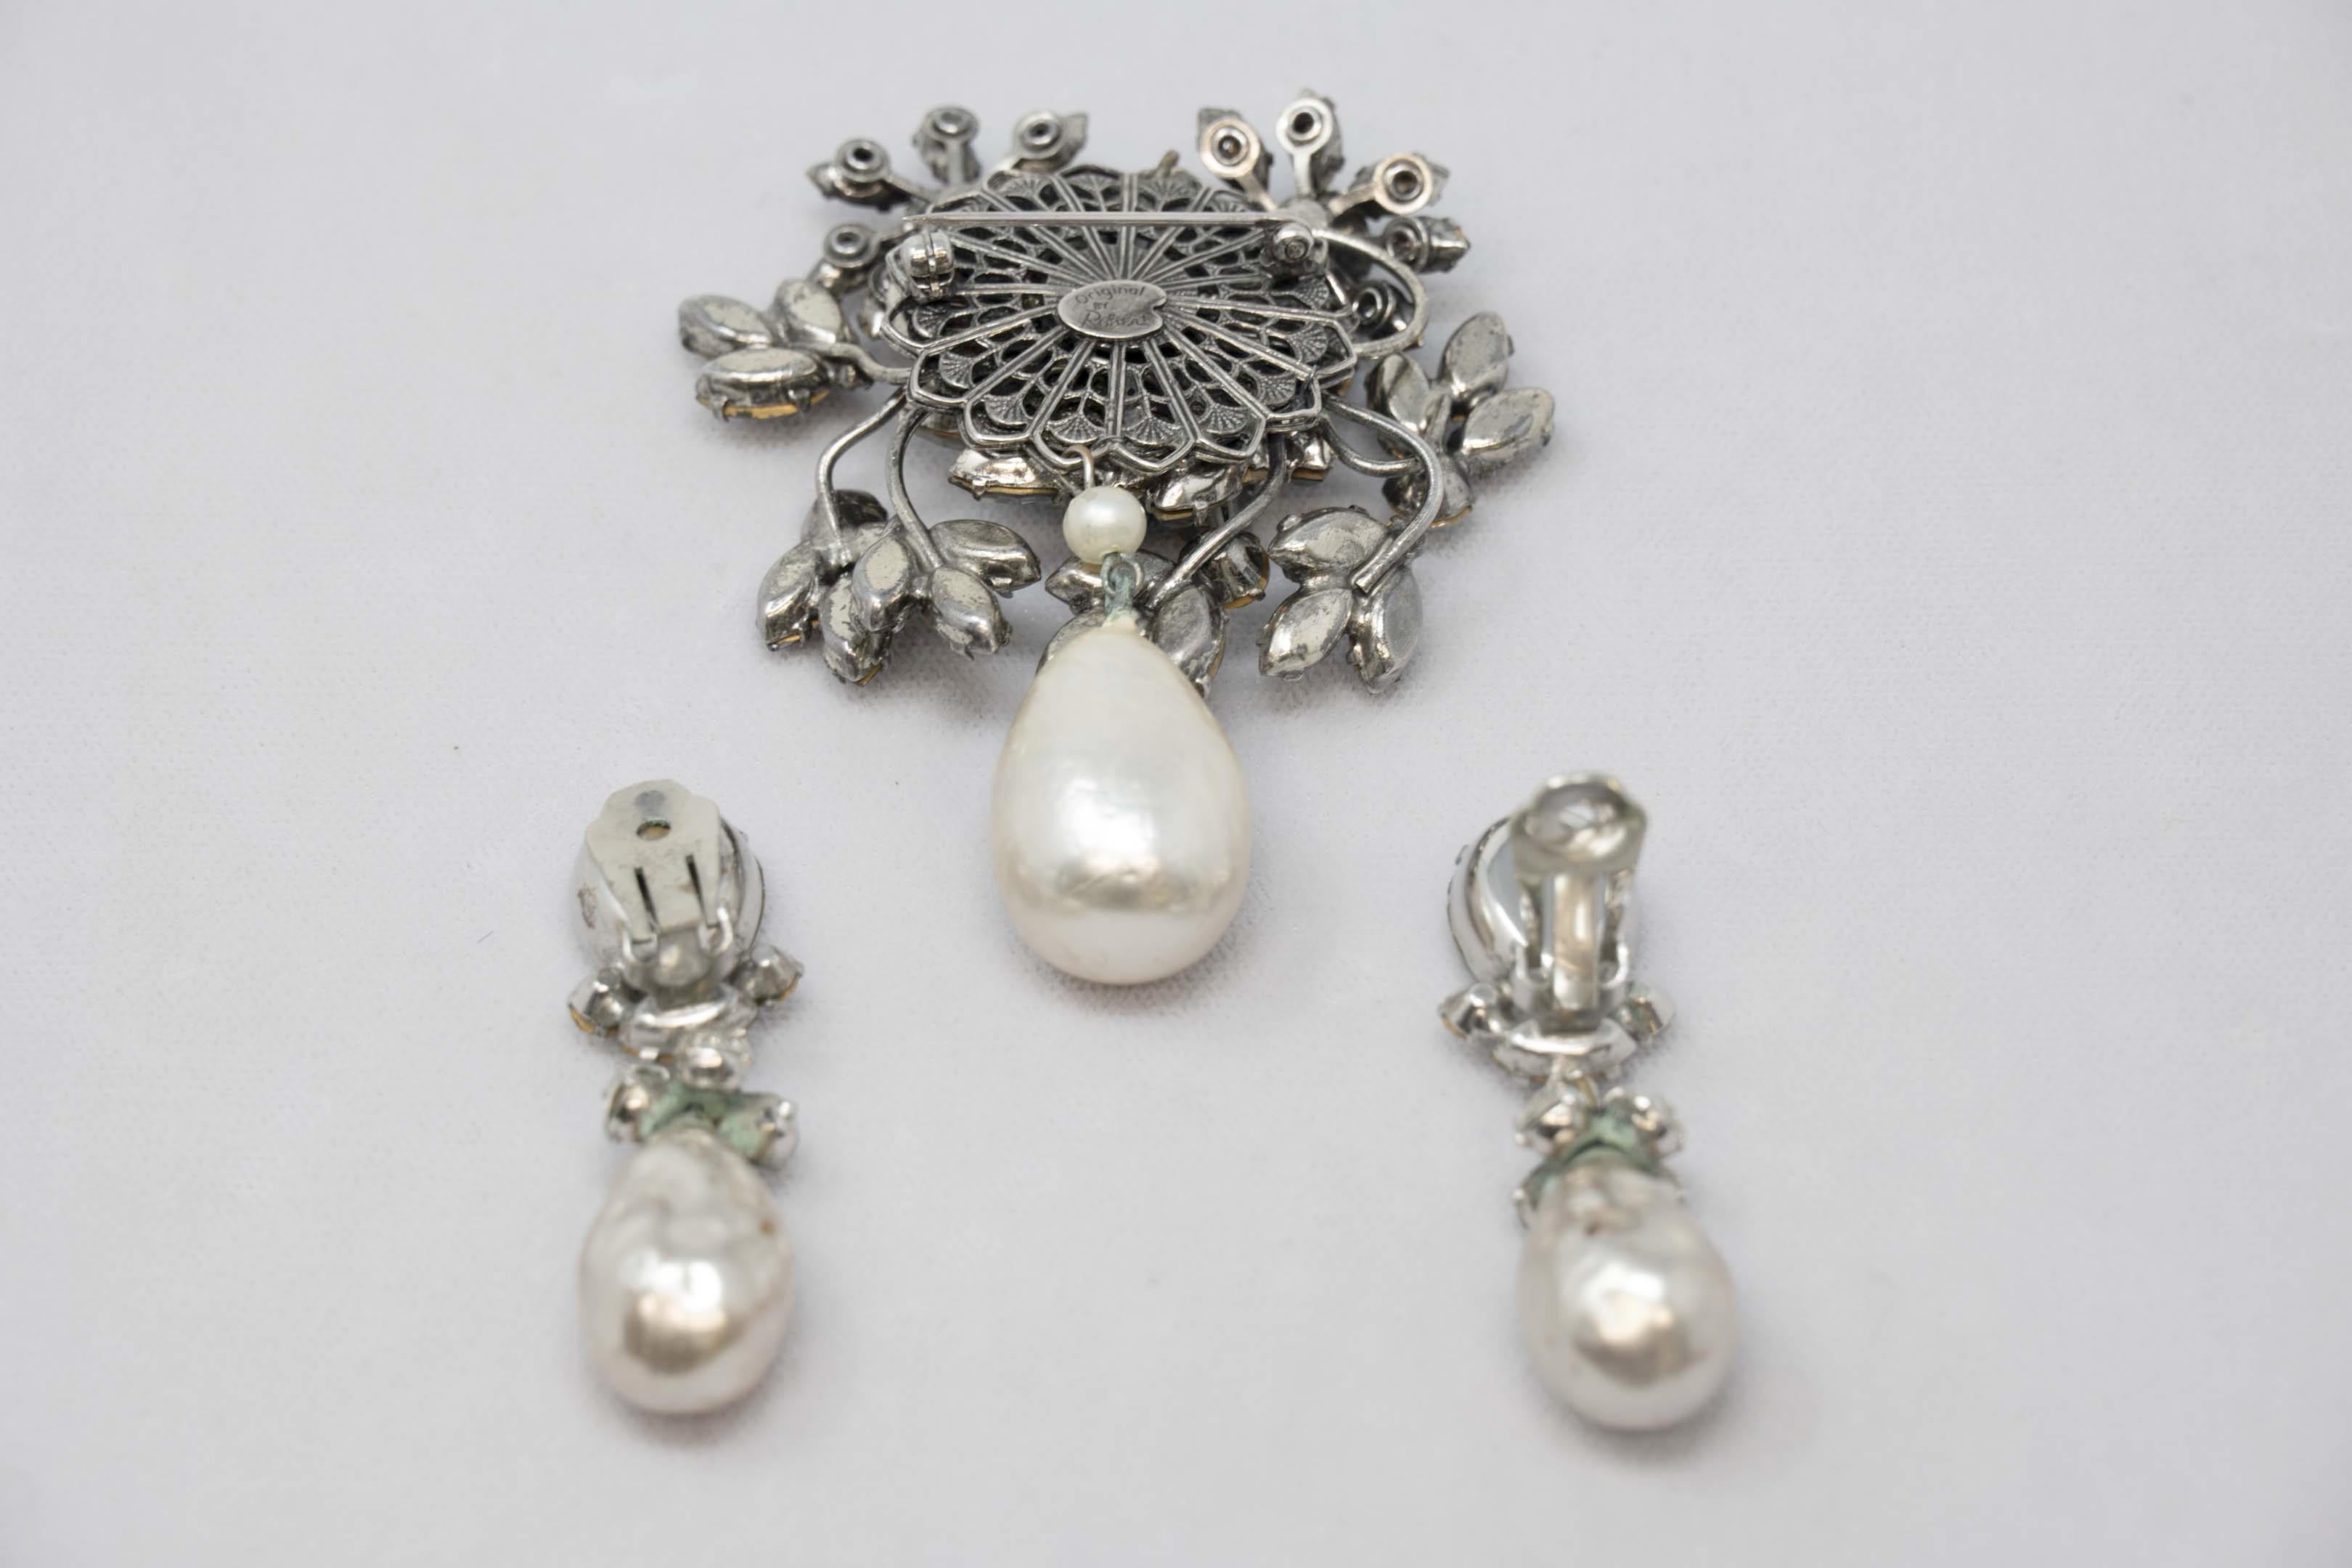 robert earrings